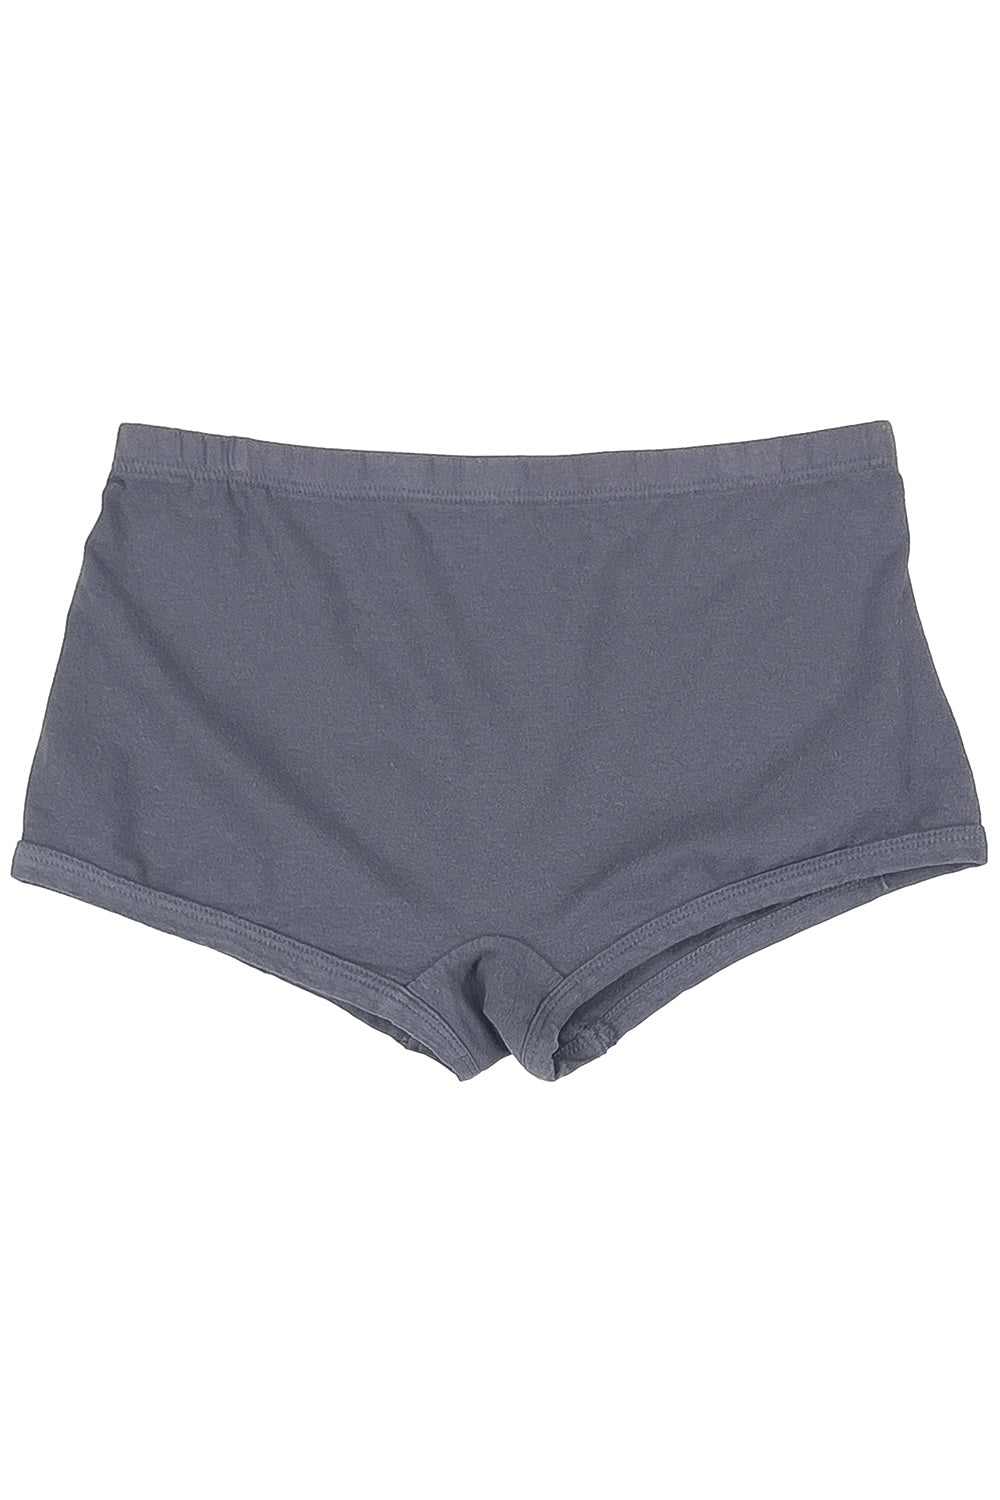 Buy WAMA - Hemp Boy Shorts Online - Hemp Store